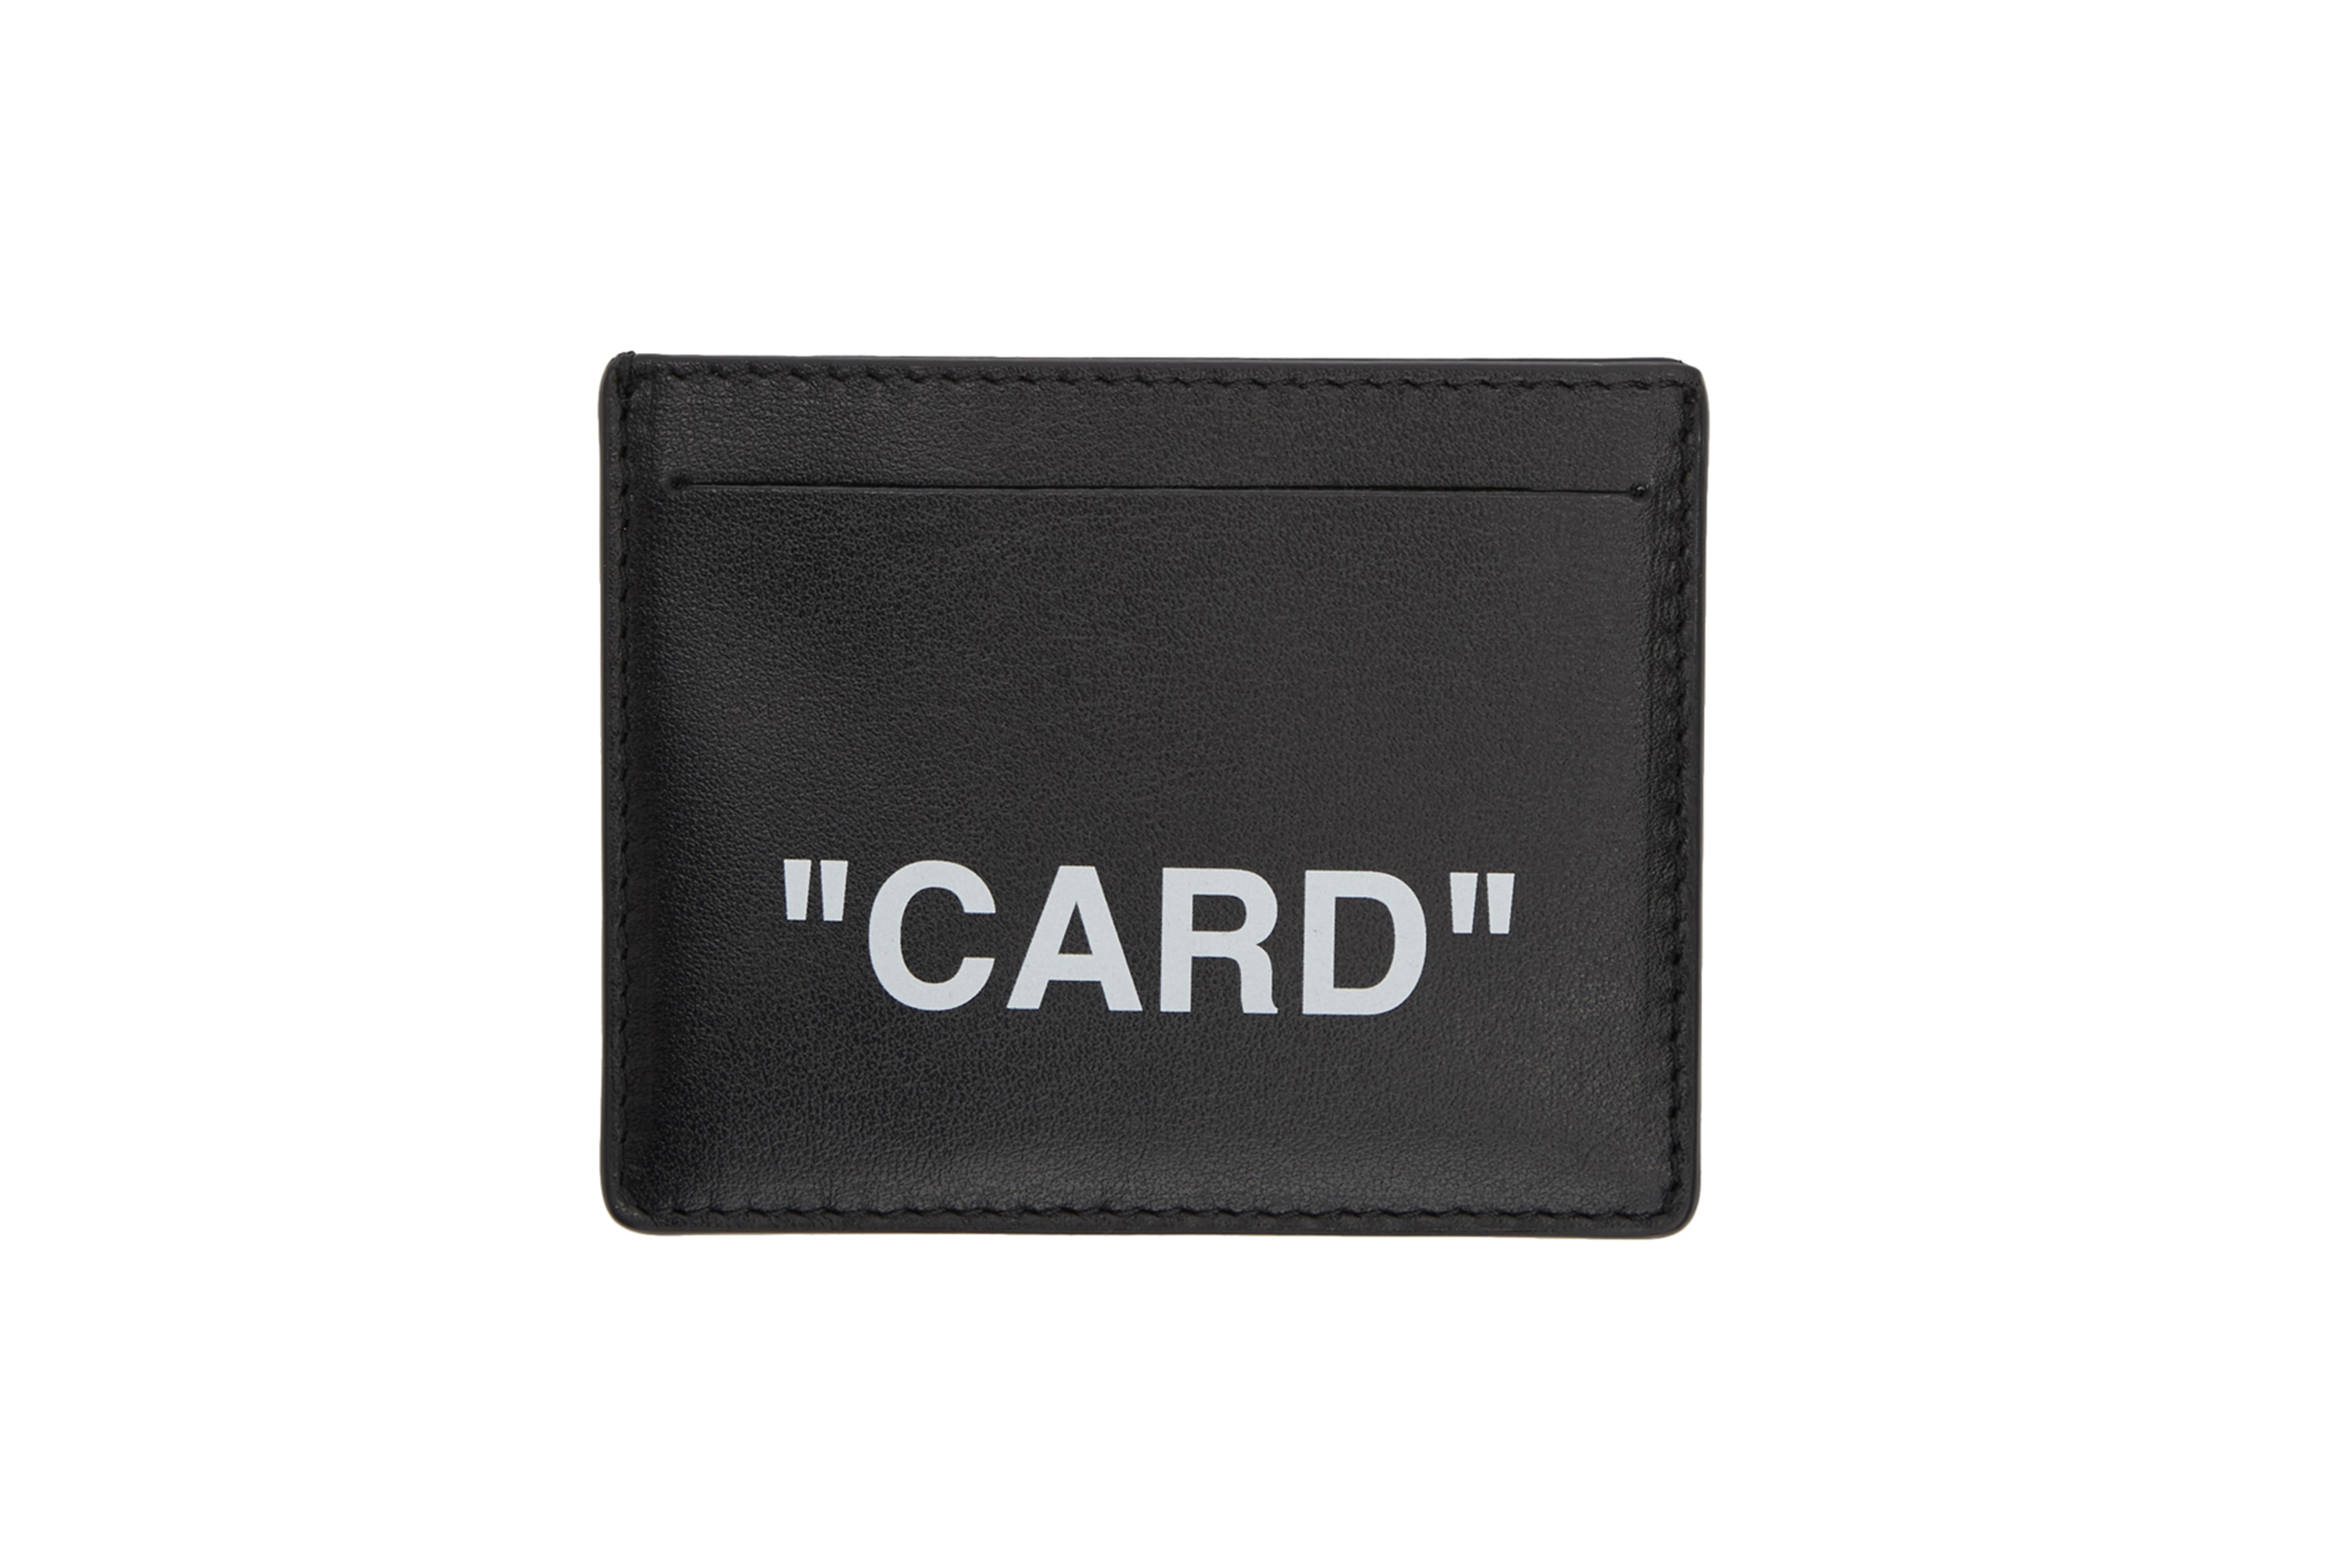 Off-White™ Card Holder Passport Holder Black Leather Travel Accessories virgil abloh